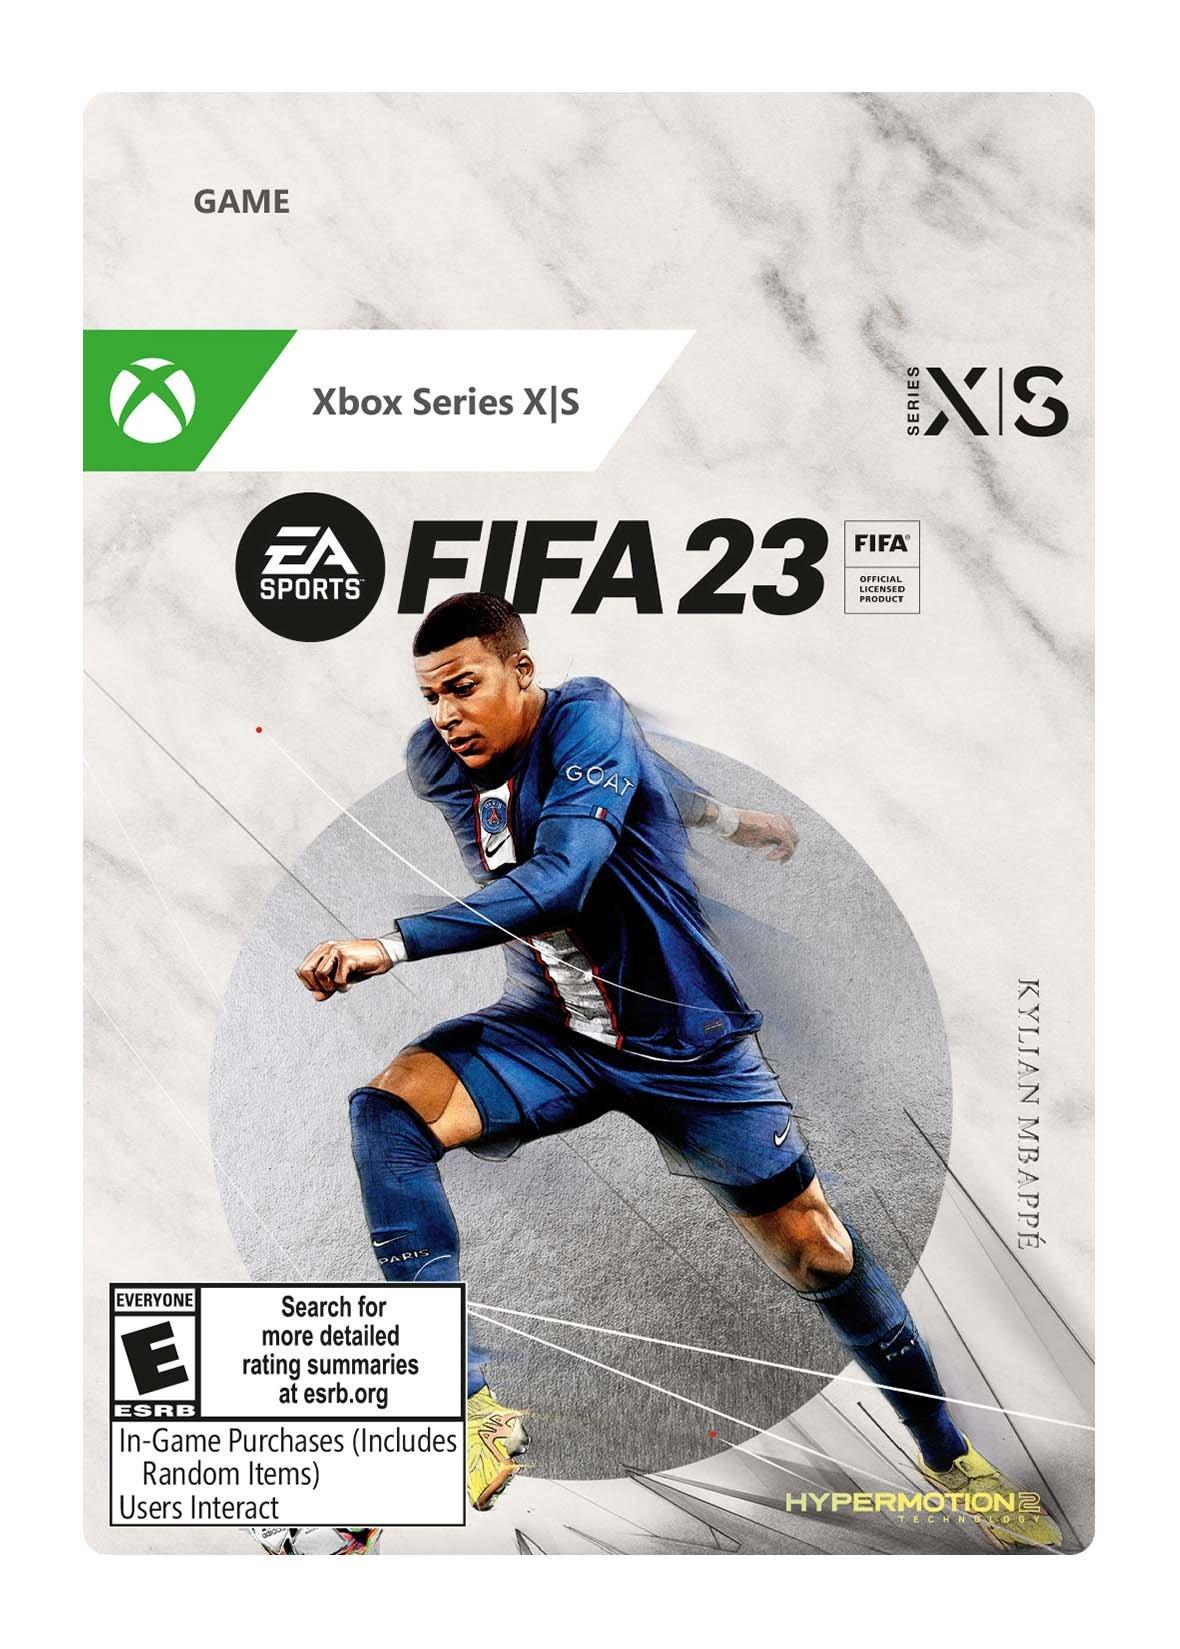 Broom companion sit FIFA 23 - Xbox Series X